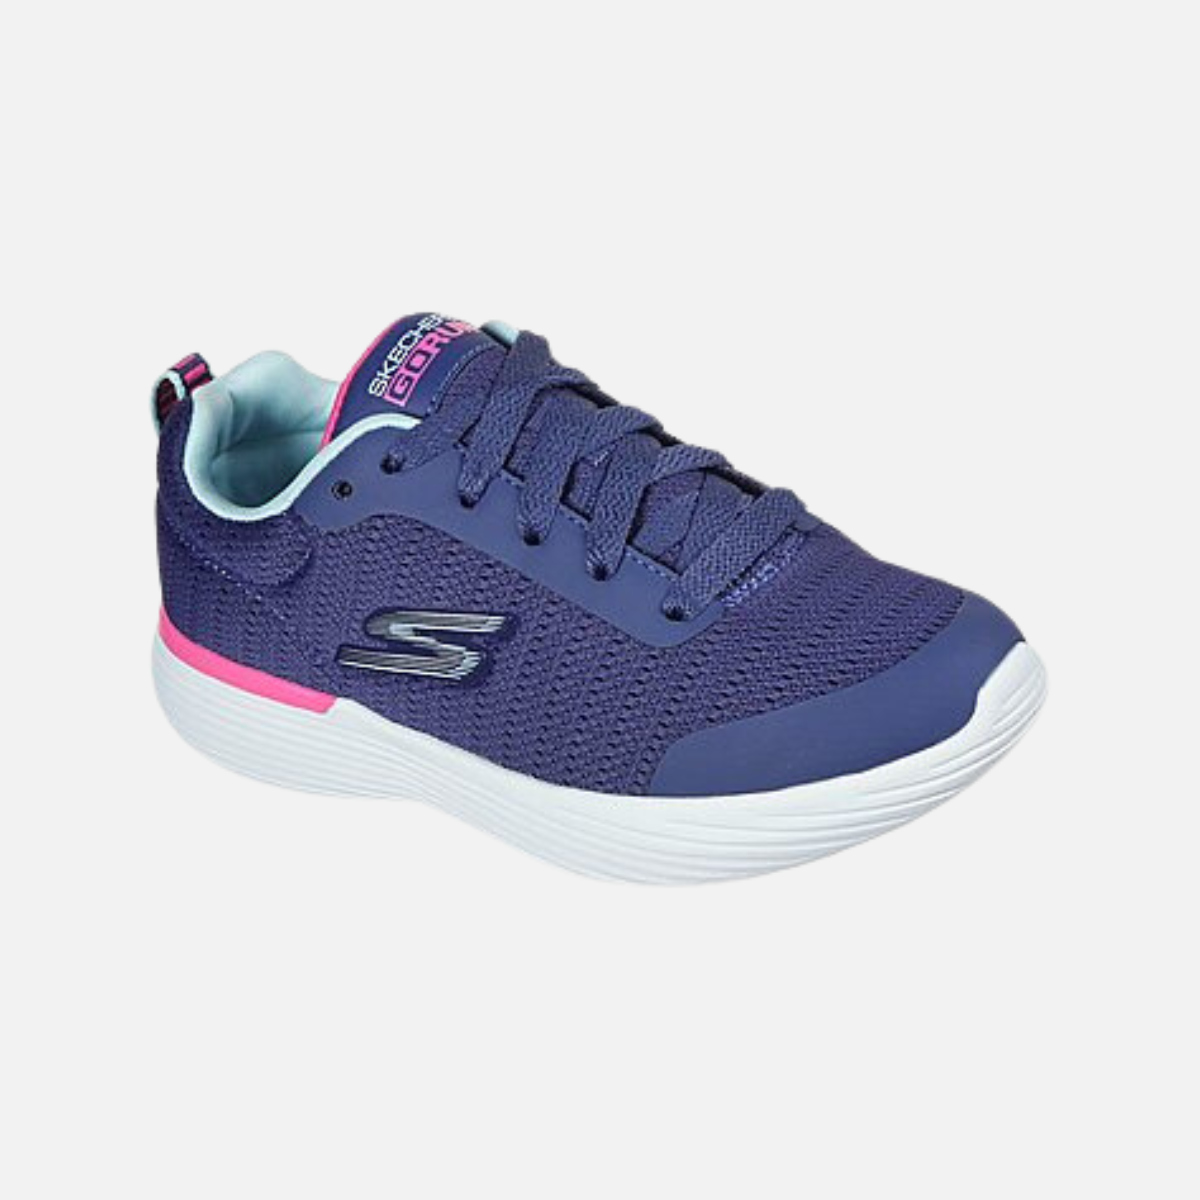 Skechers GOrun 400 V2-Basic Edge Kids Shoes (8-12 Year)-Navy/Pink